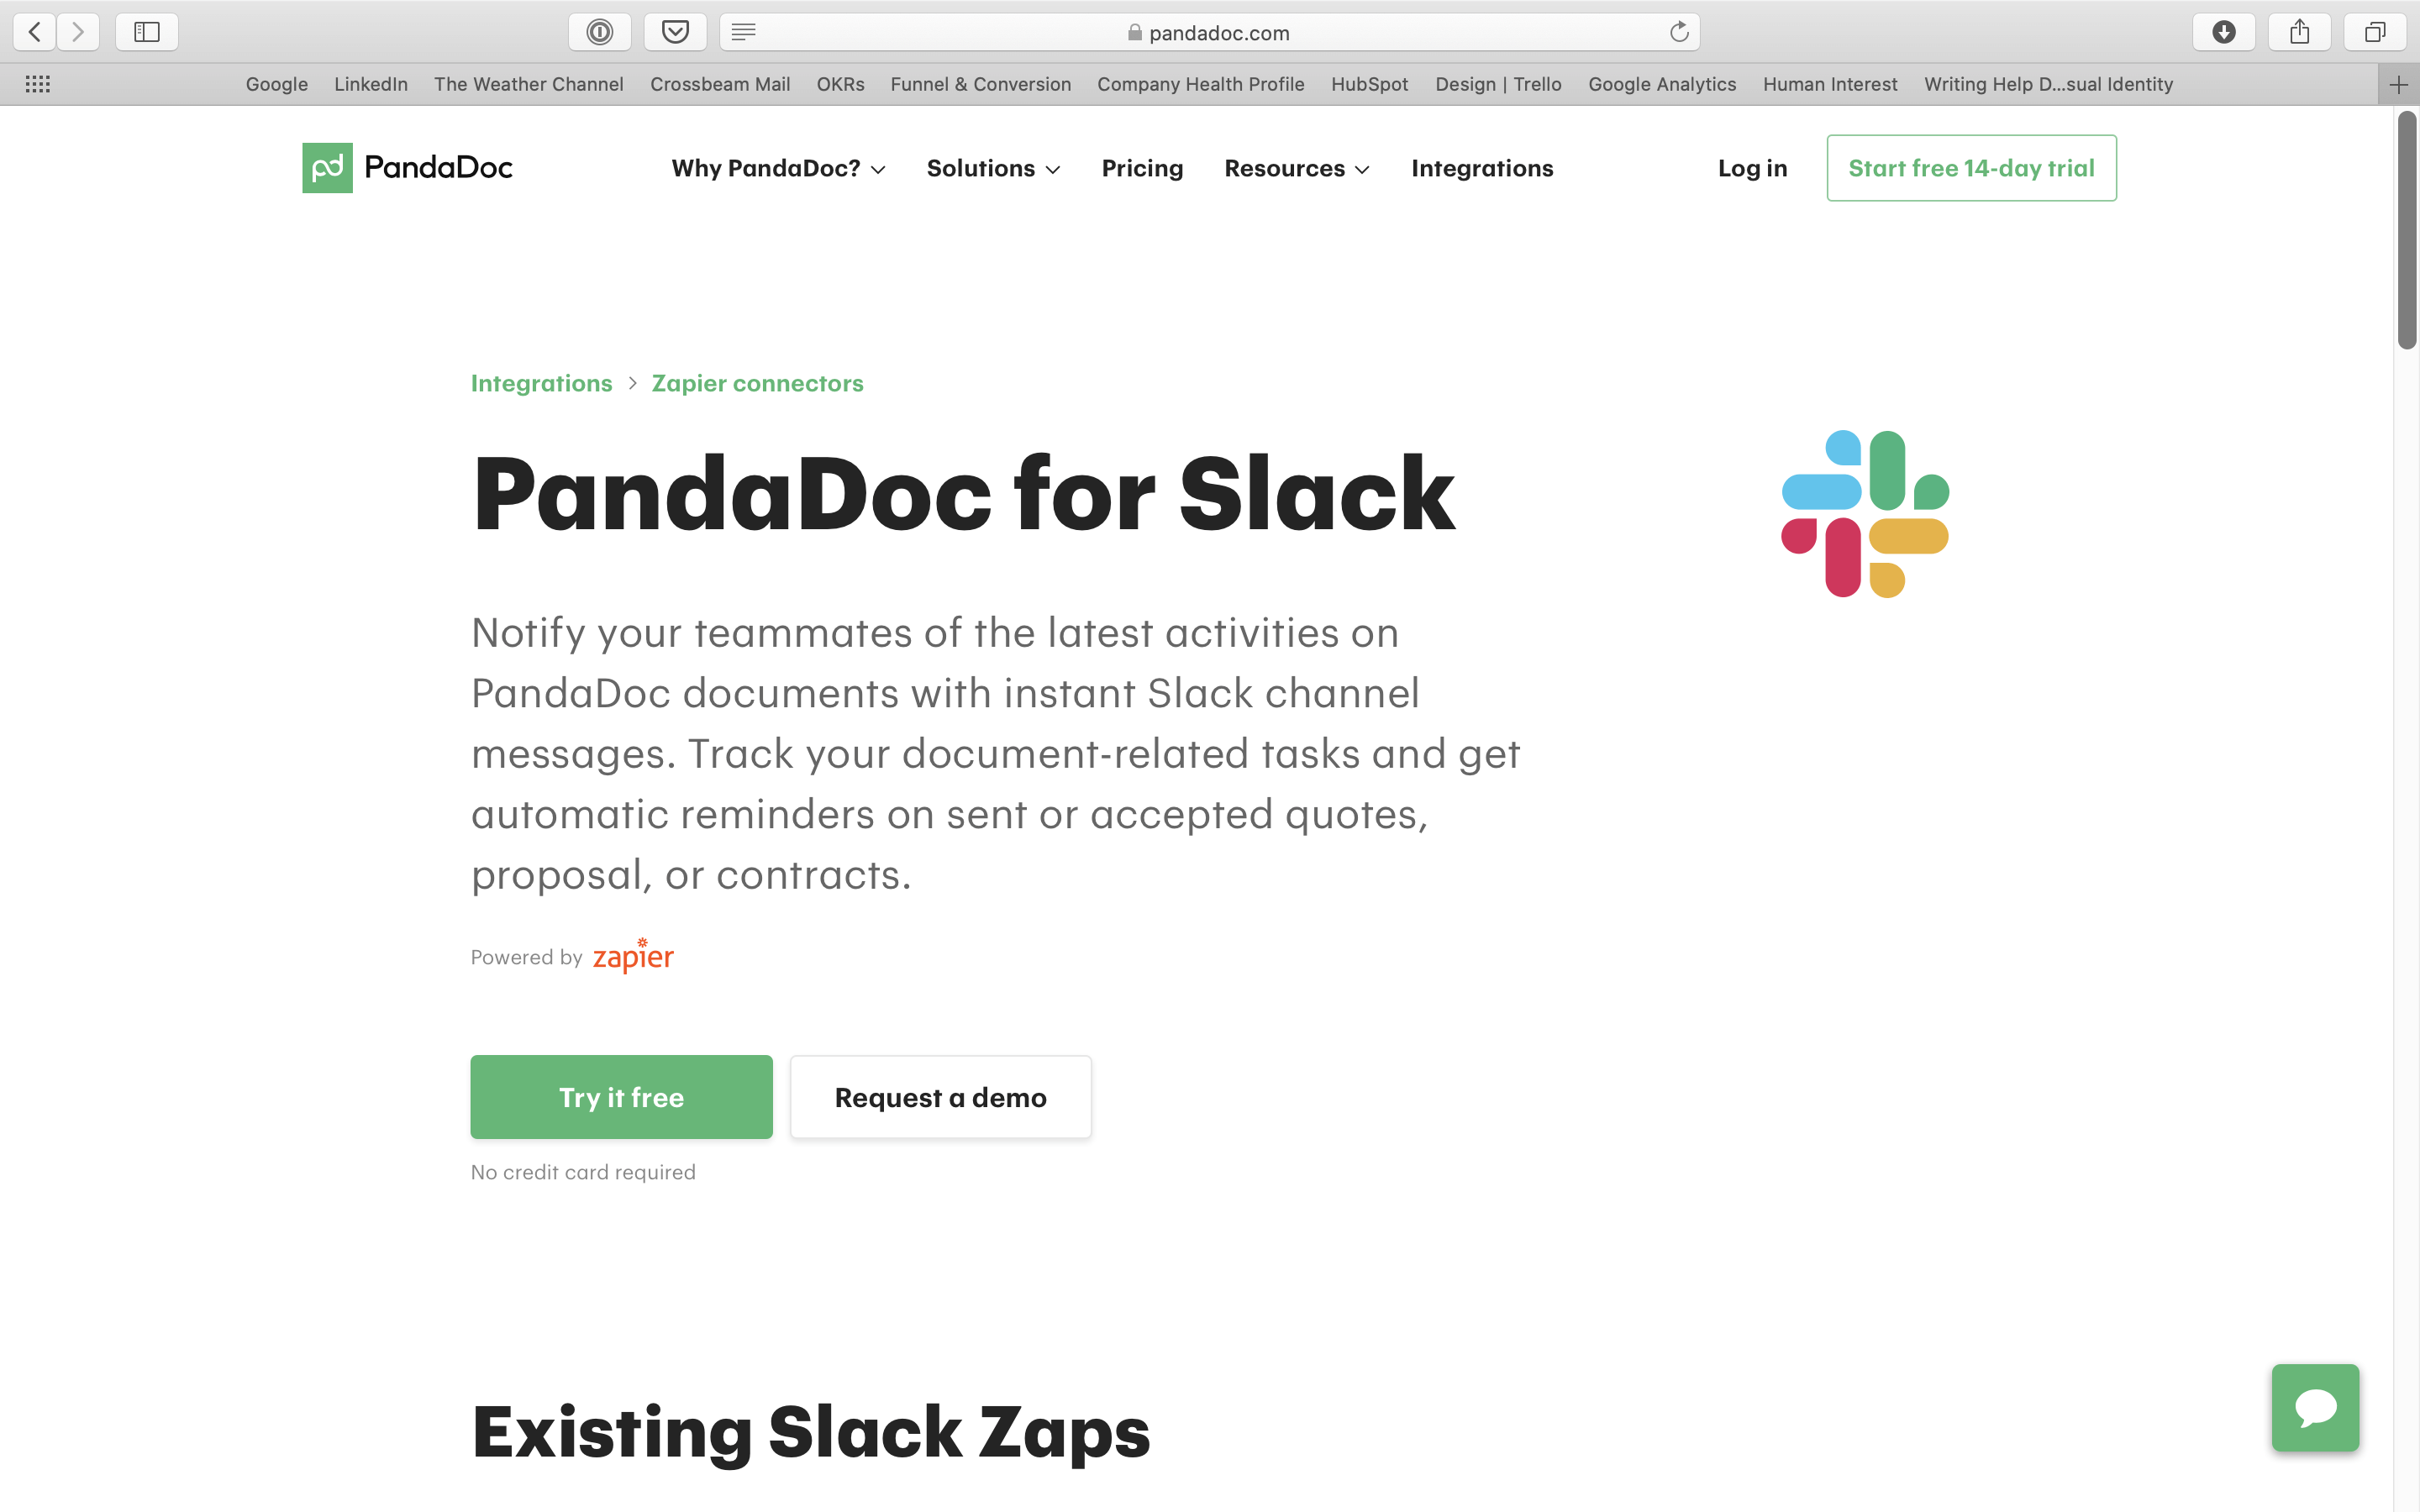 PandaDoc for Slack